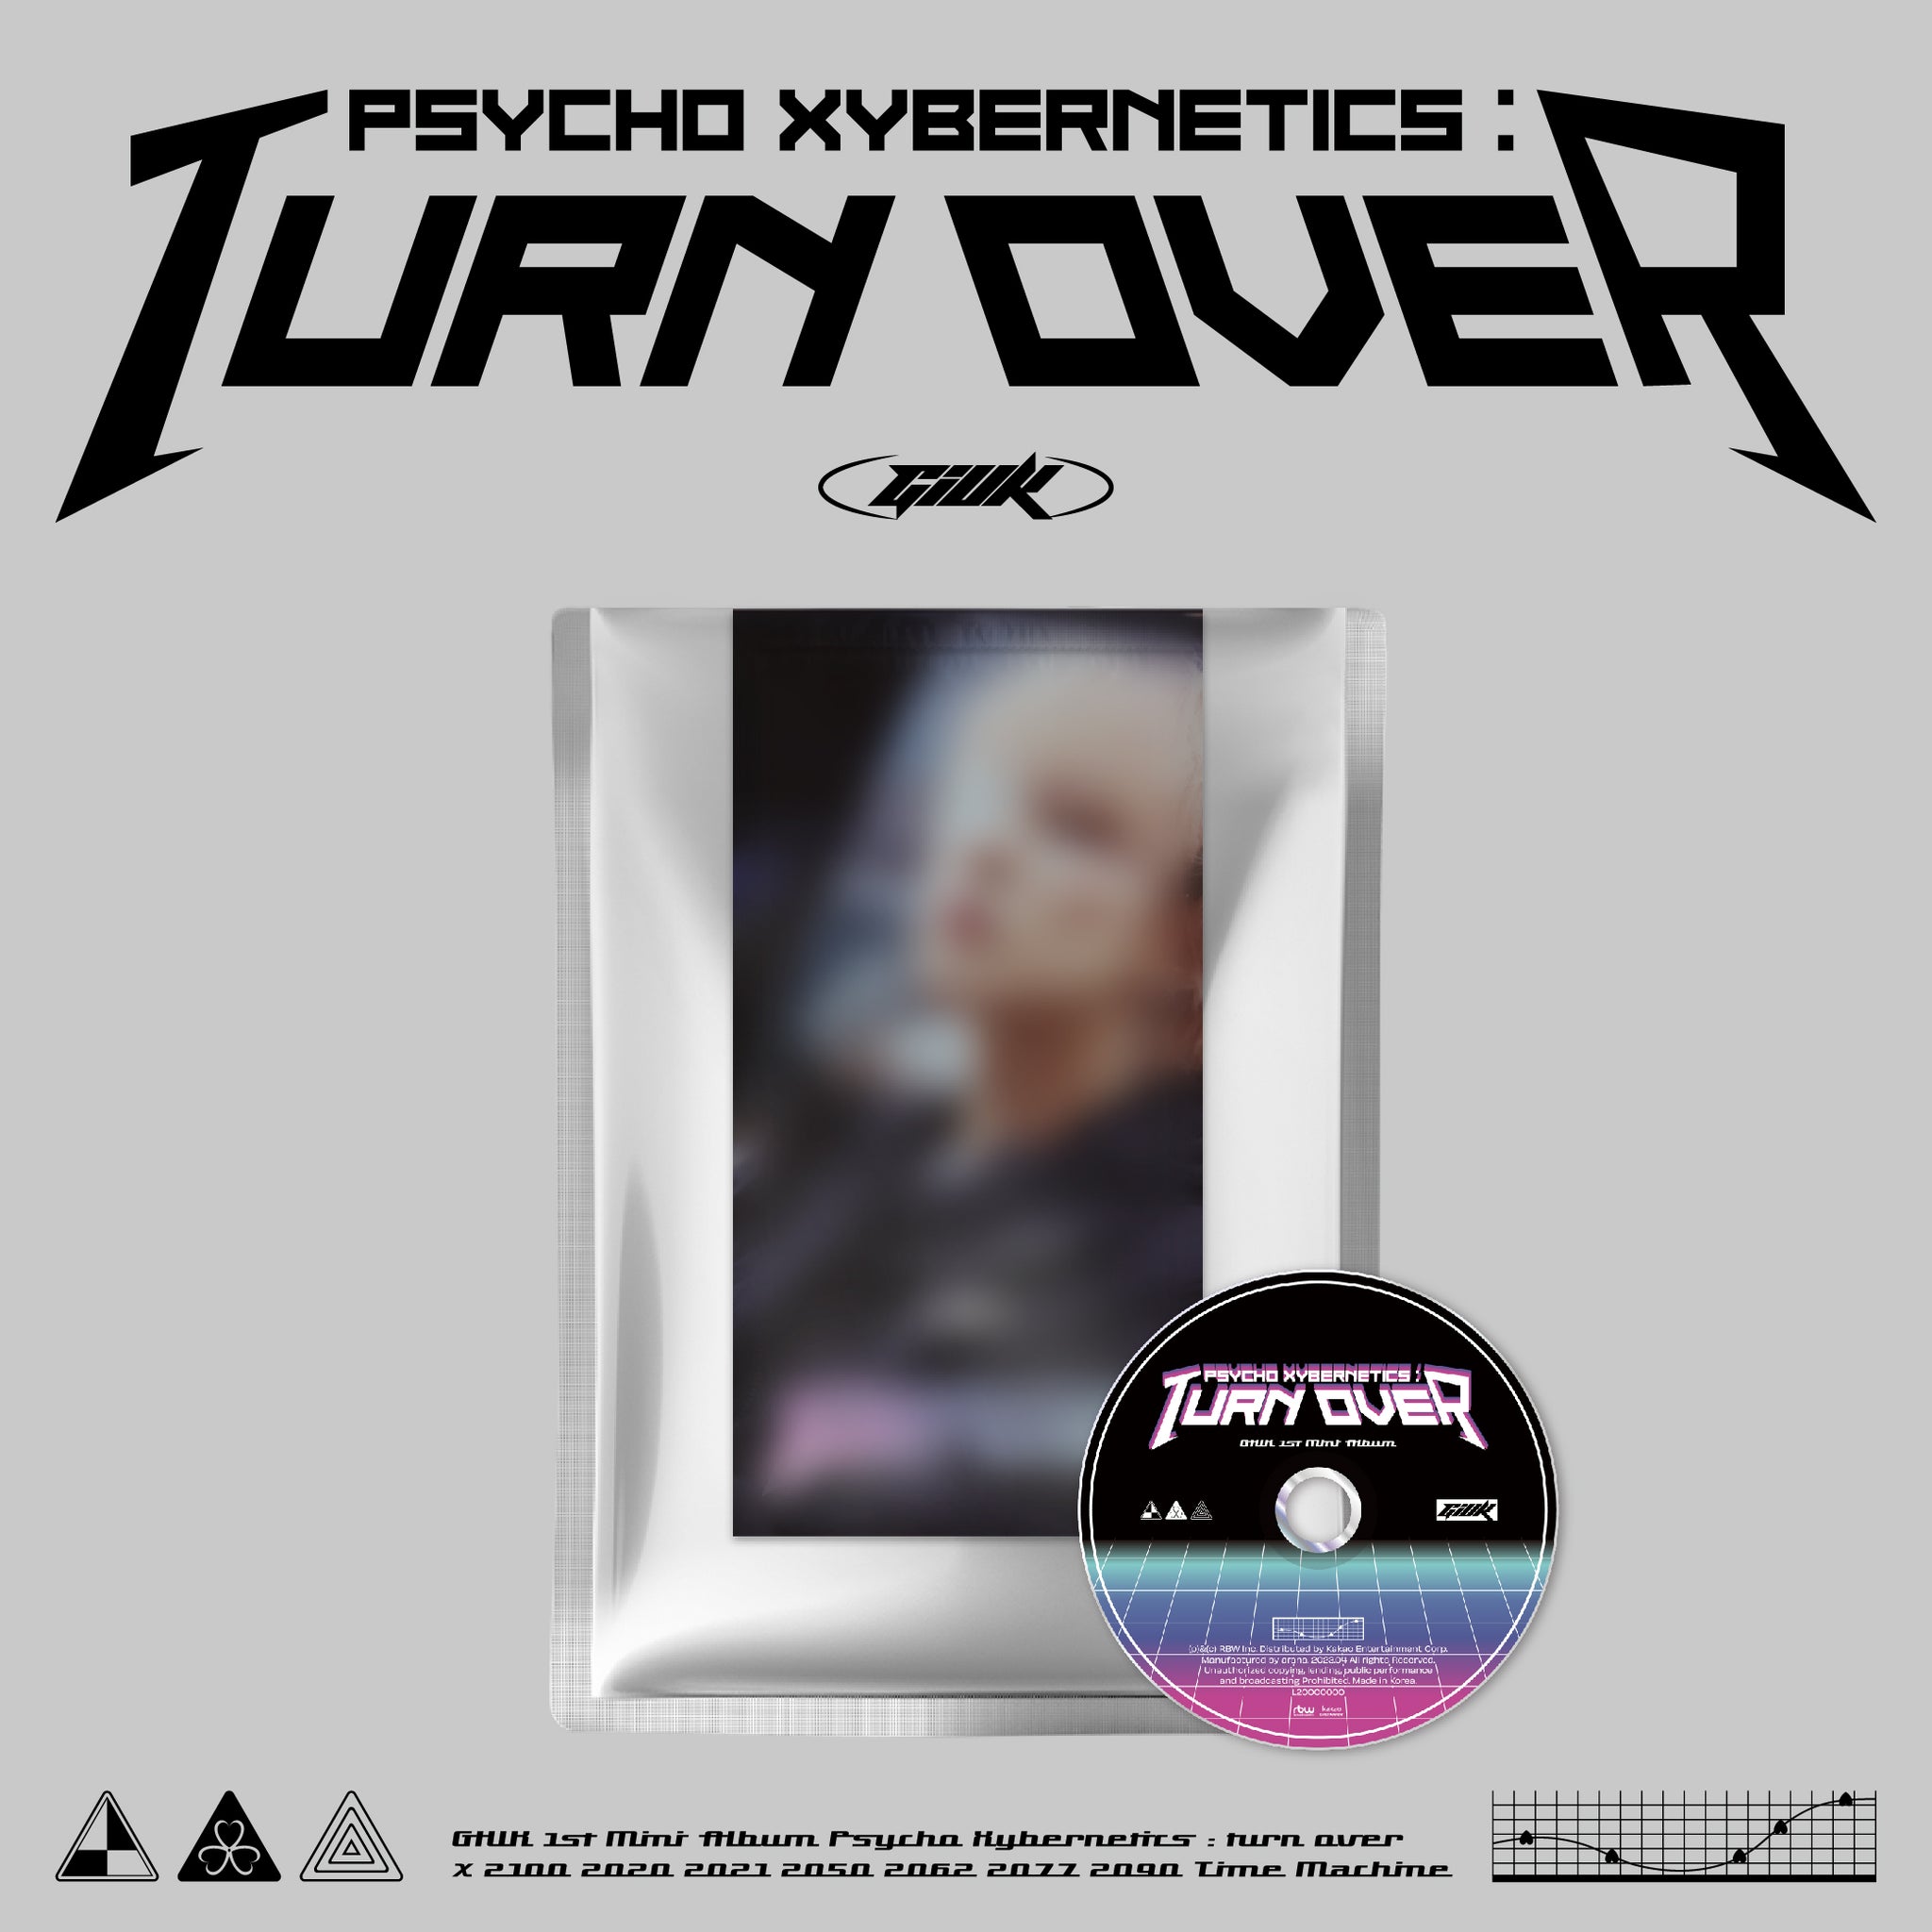 GIUK (ONEWE) 1ST MINI ALBUM 'PSYCHO XYBERNETICS : TURN OVER' COVER